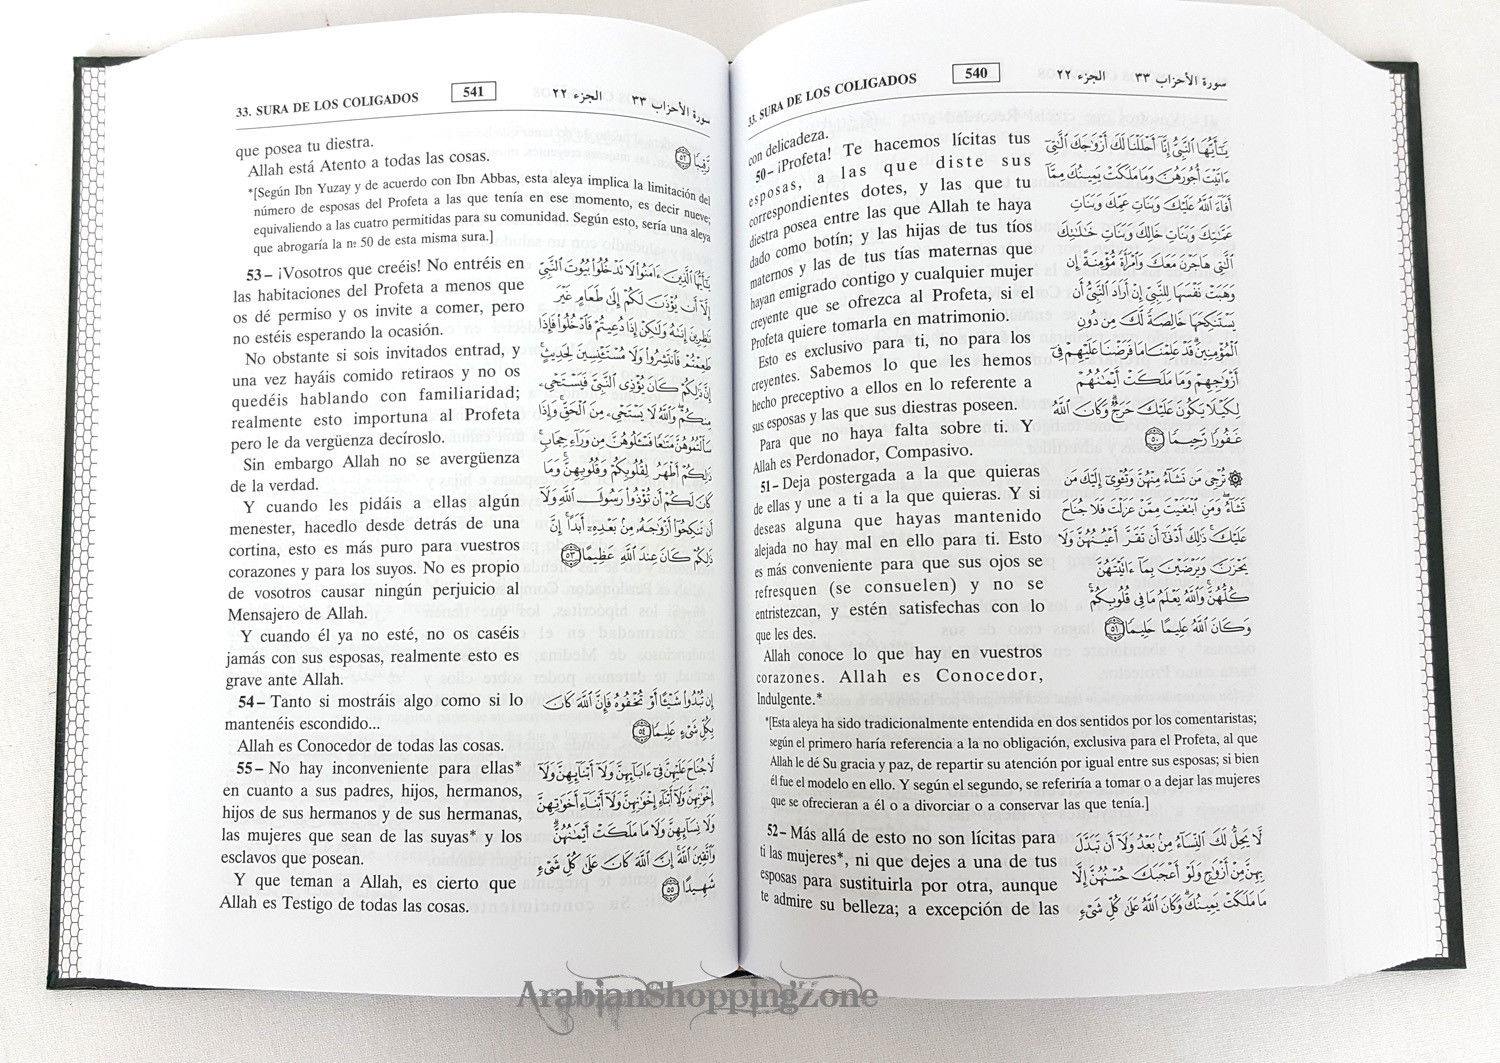 Noble Quran Arabic / Spanish (Espanol) Translation - Arabian Shopping Zone